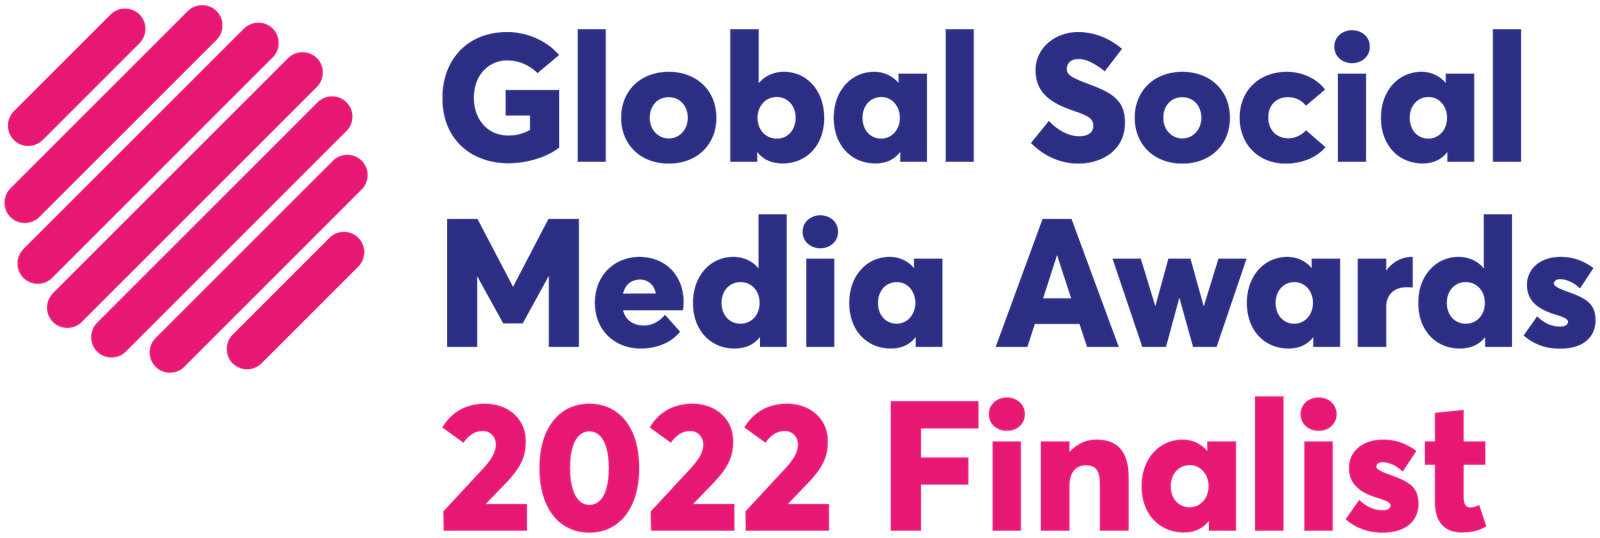 Global Social Media Awards Finalist 2022 Badge